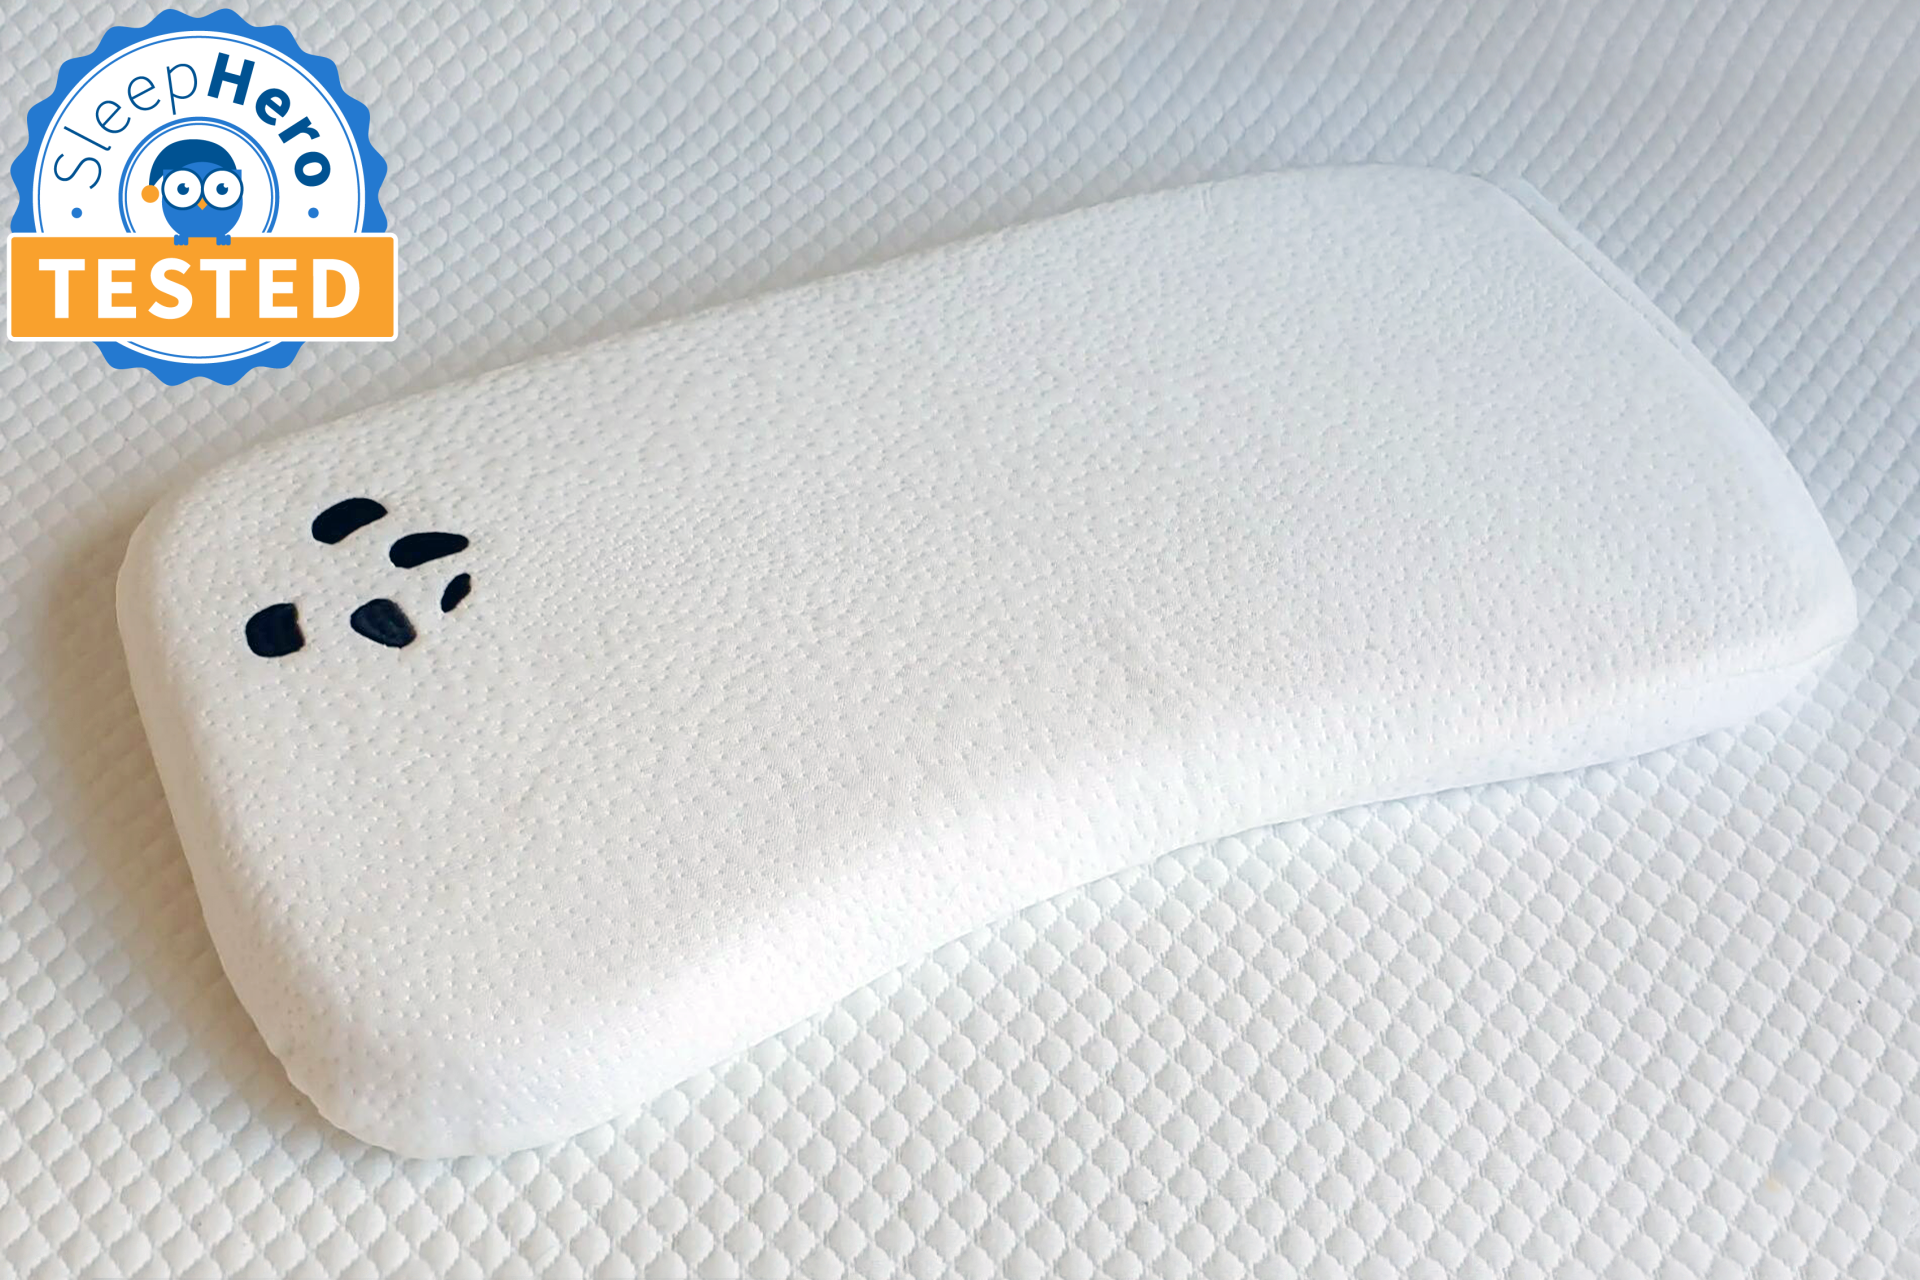 Visco Memory Foam With Gel Pillow % 100 Cotton Neck Cushion